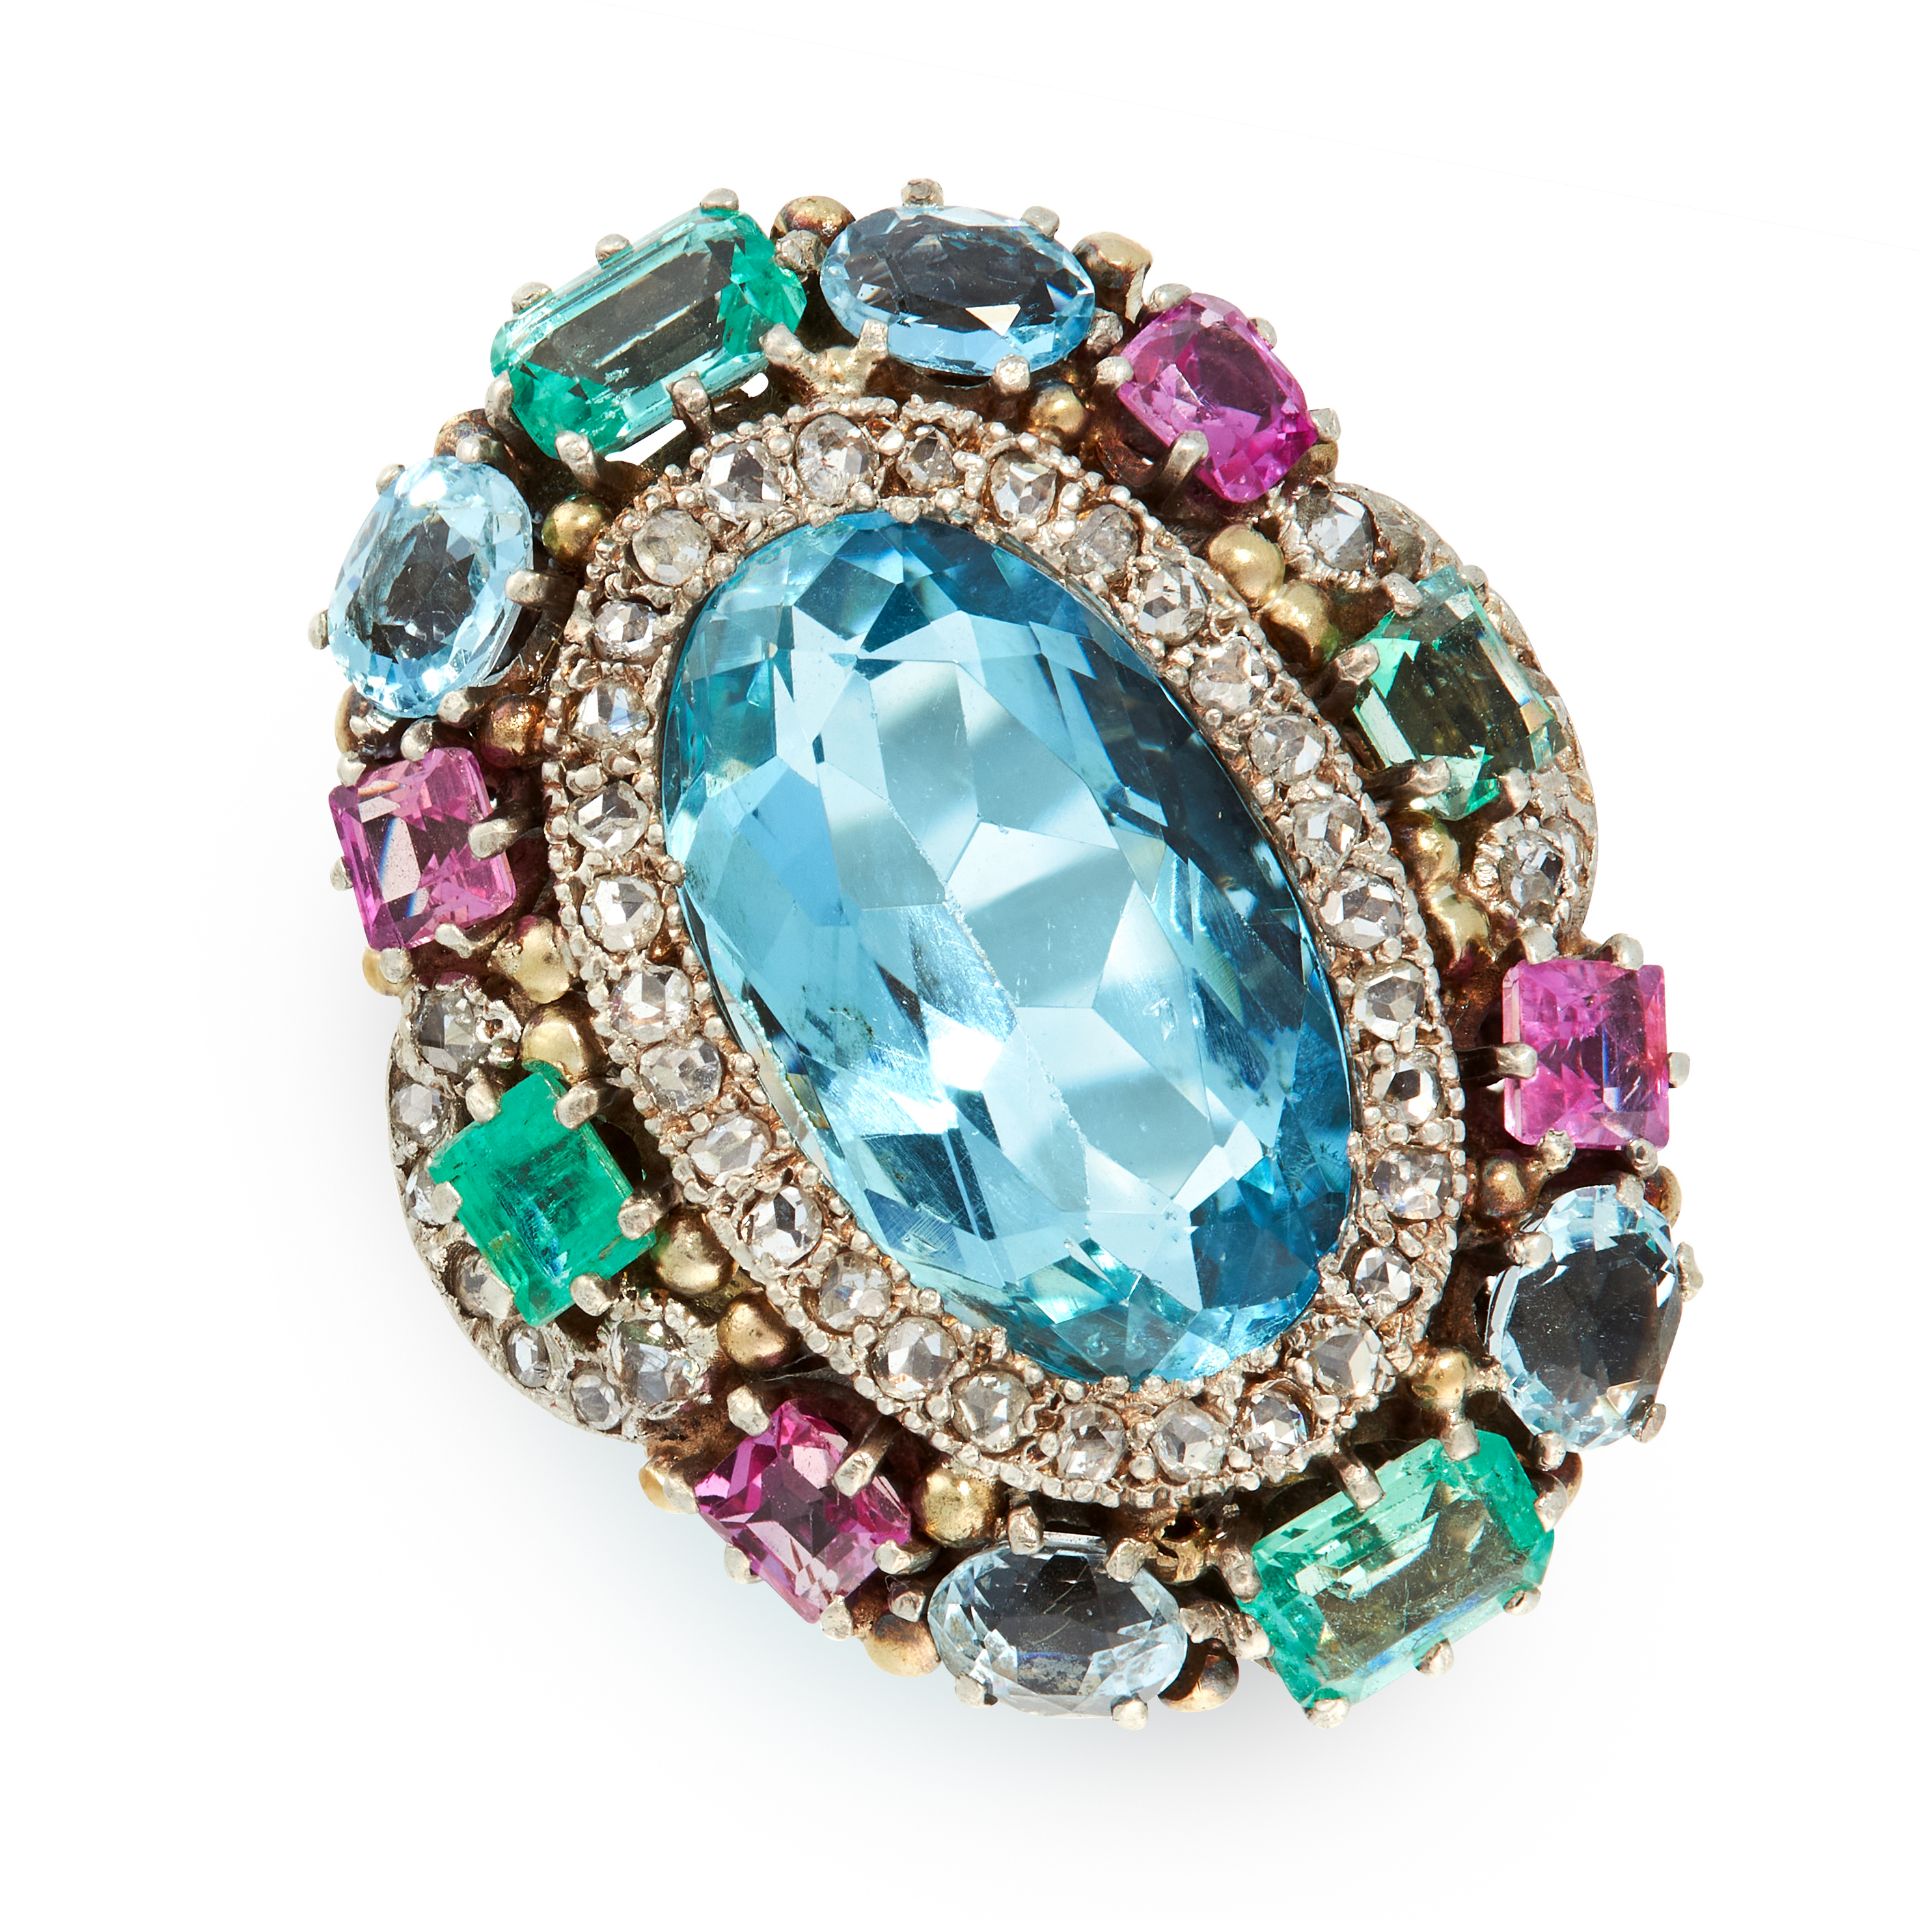 AN AQUAMARINE, RUBY, EMERALD AND DIAMOND DRESS RING set with an oval cut aquamarine of 5.22 carats